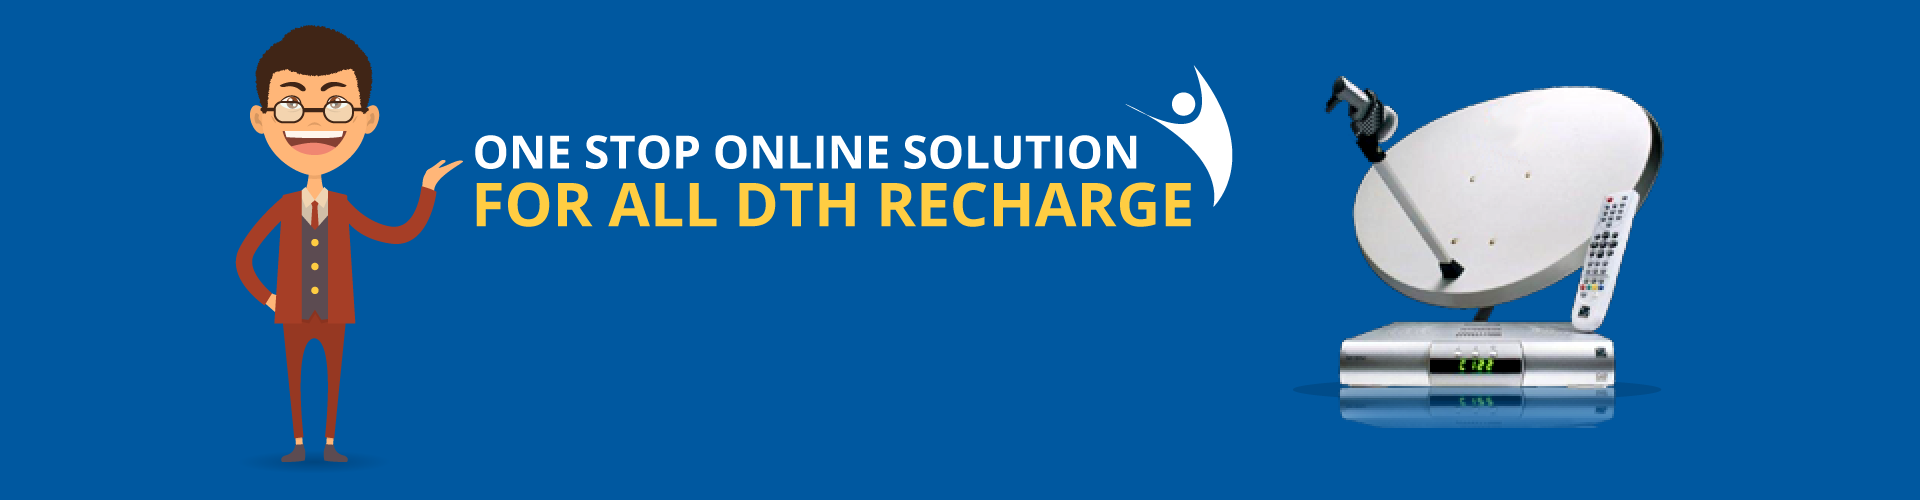 dth recharge banner